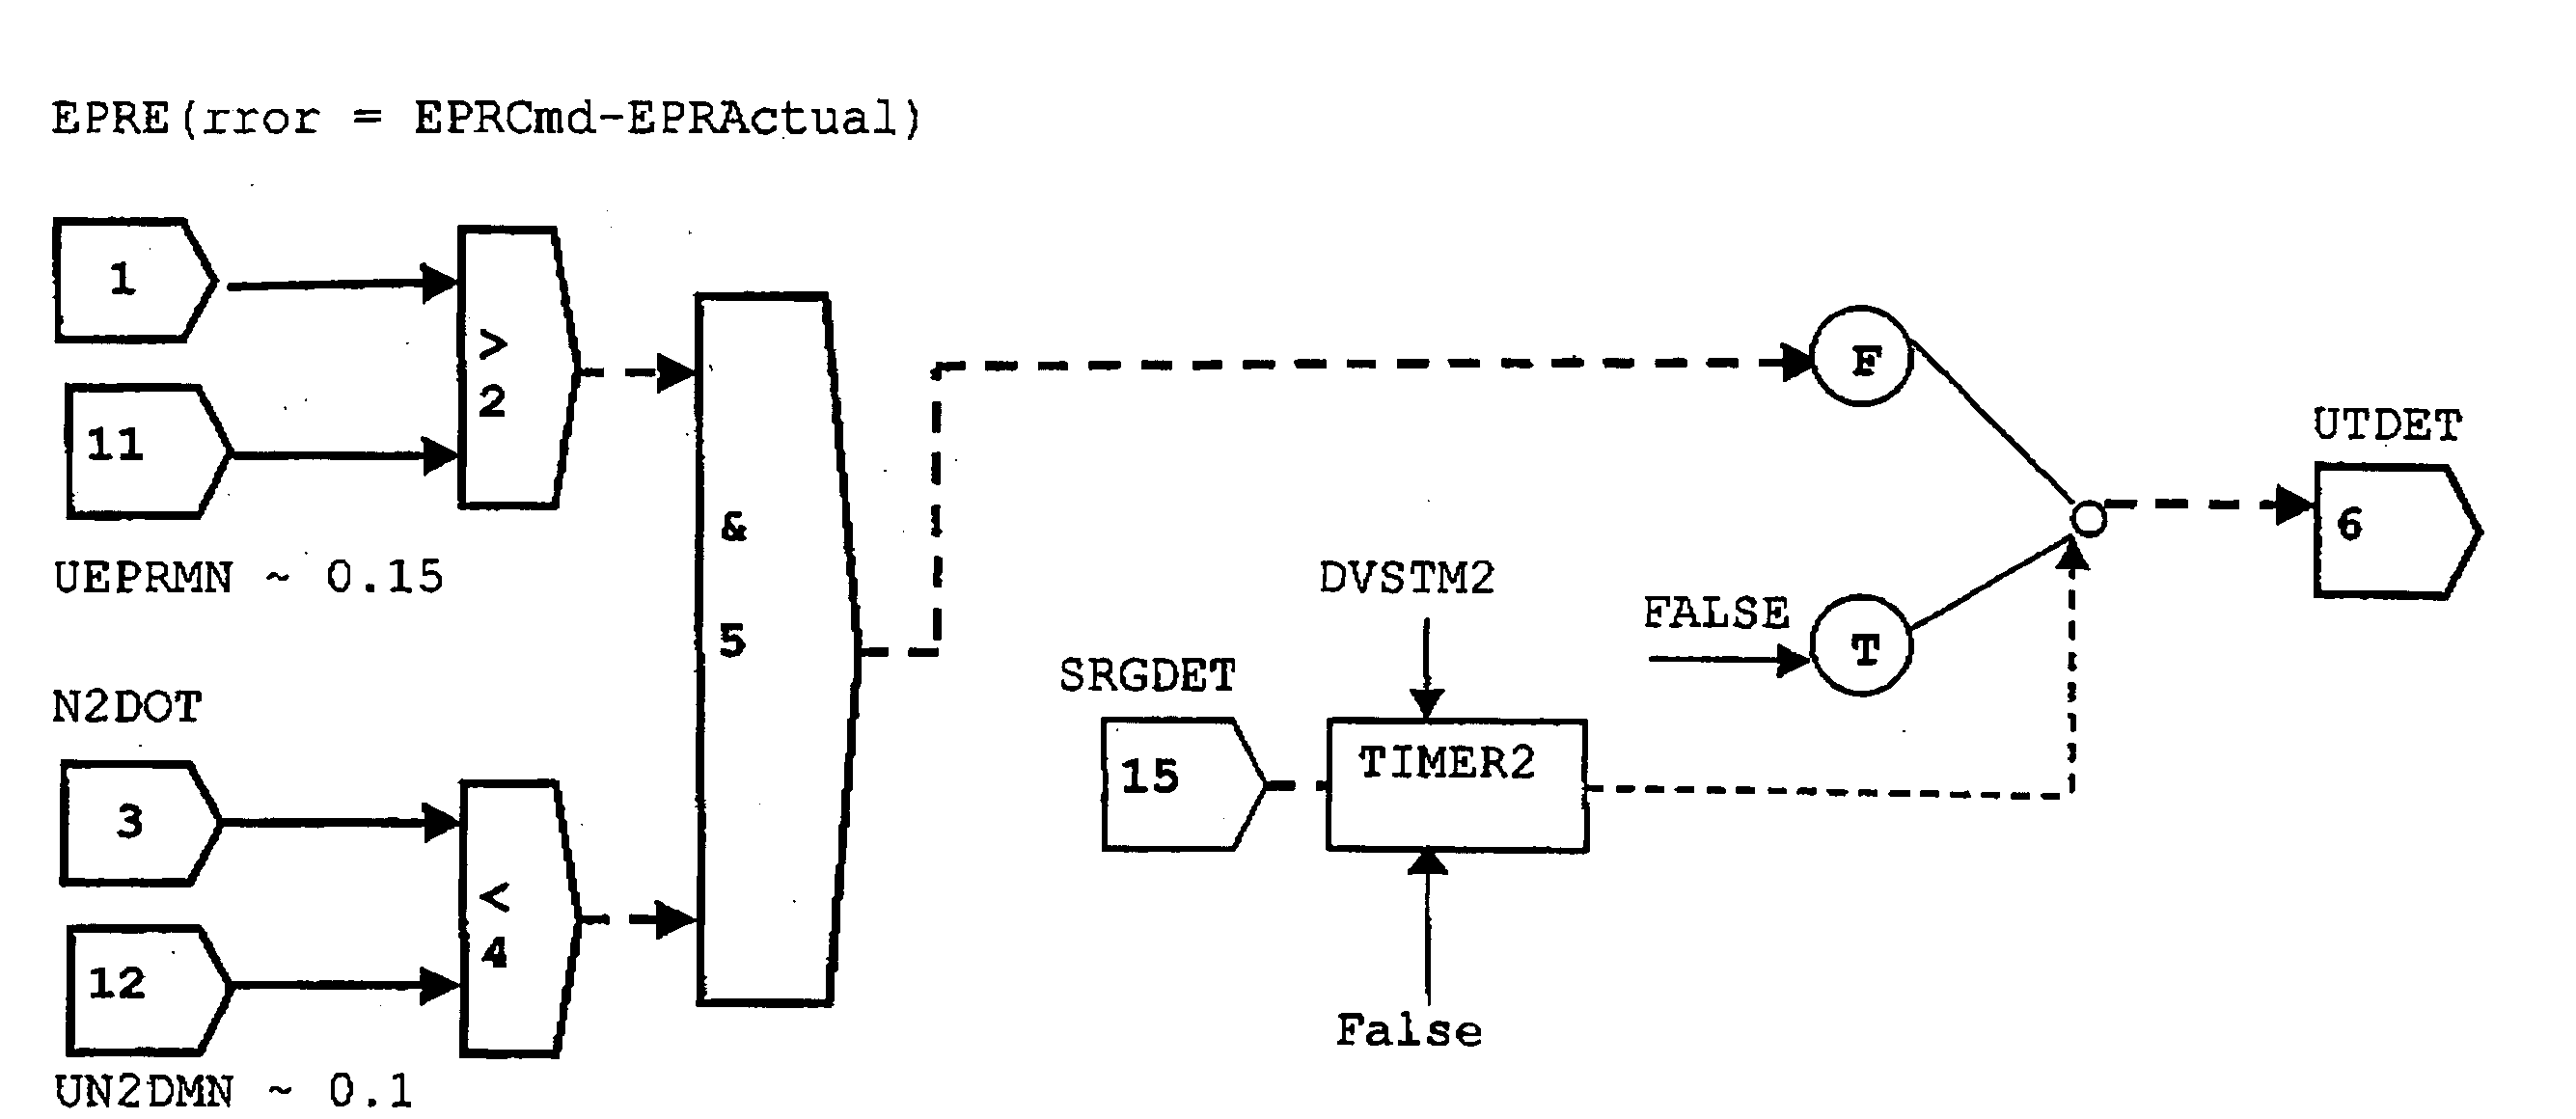 Fault detection logic for engines